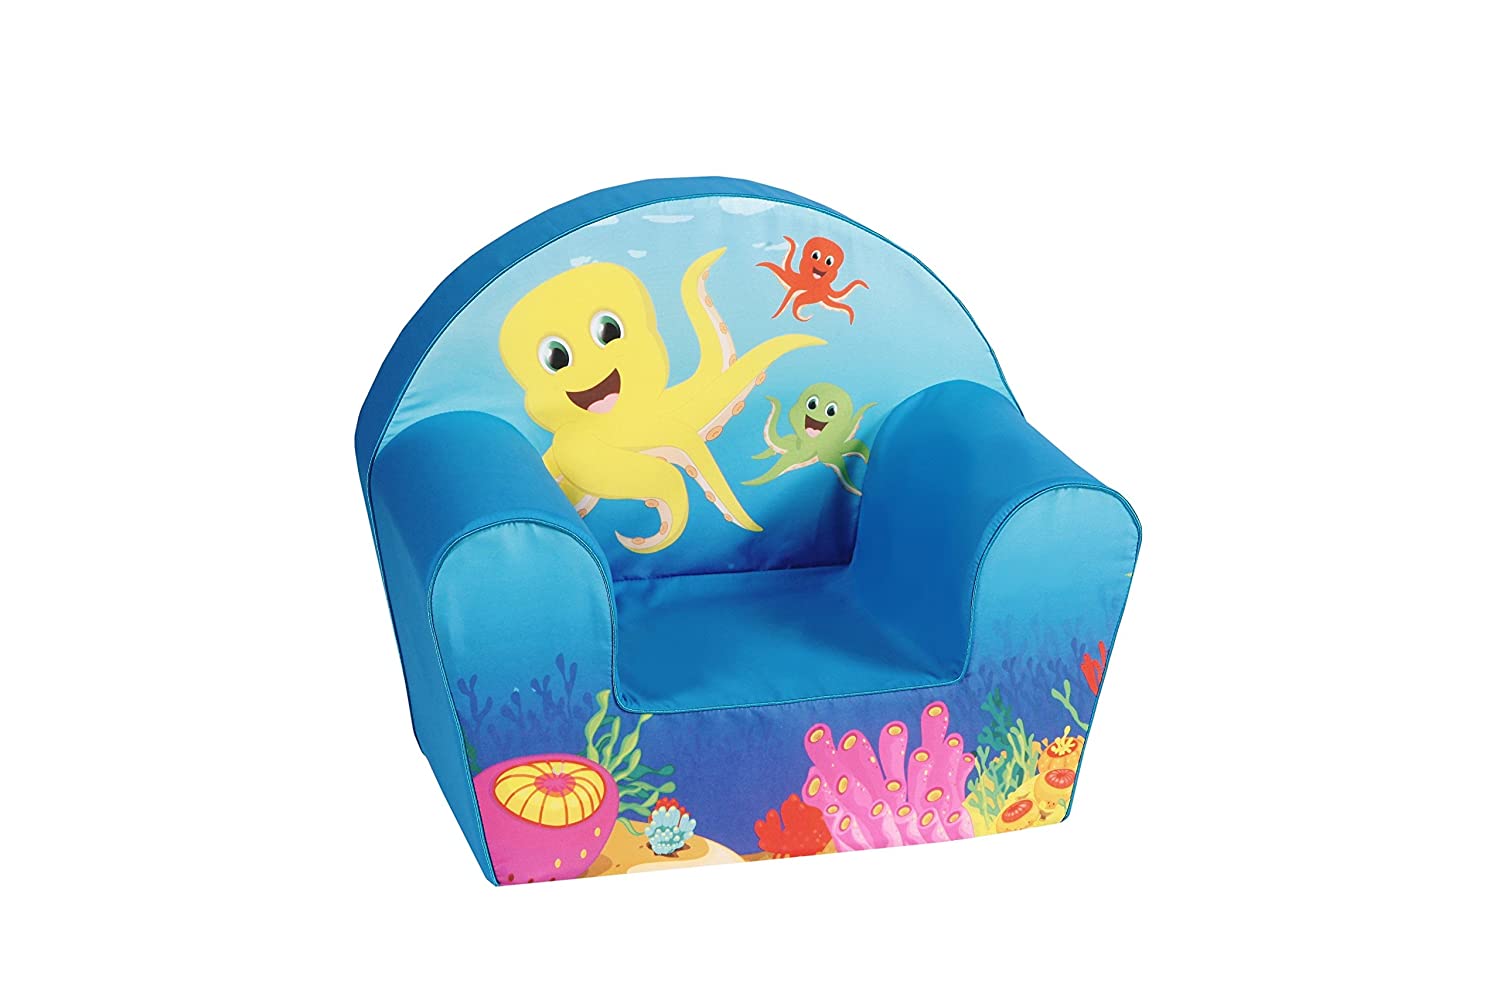 Knorr-Baby 490308 Octopus Mini Armchair – Blue